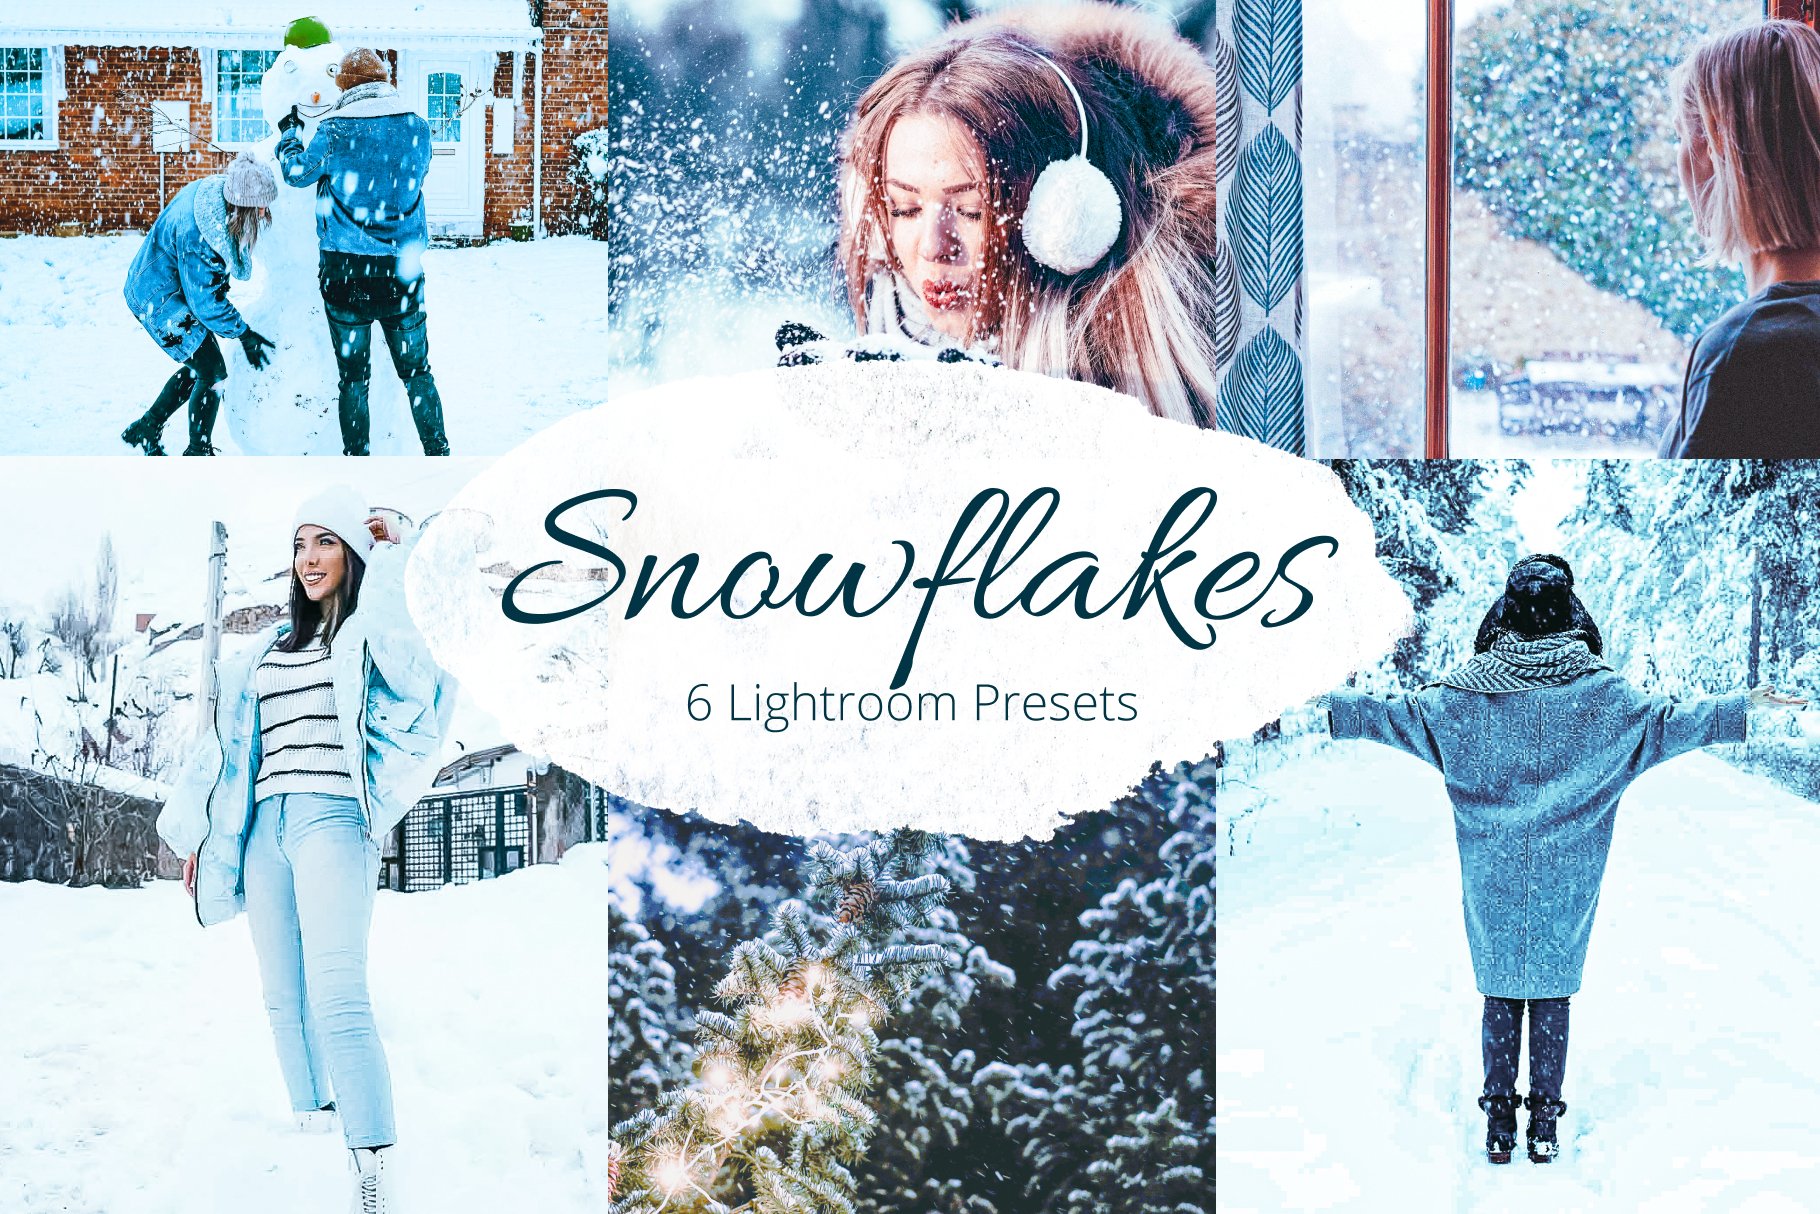 Snowflakes Lightroom Presets bundlecover image.